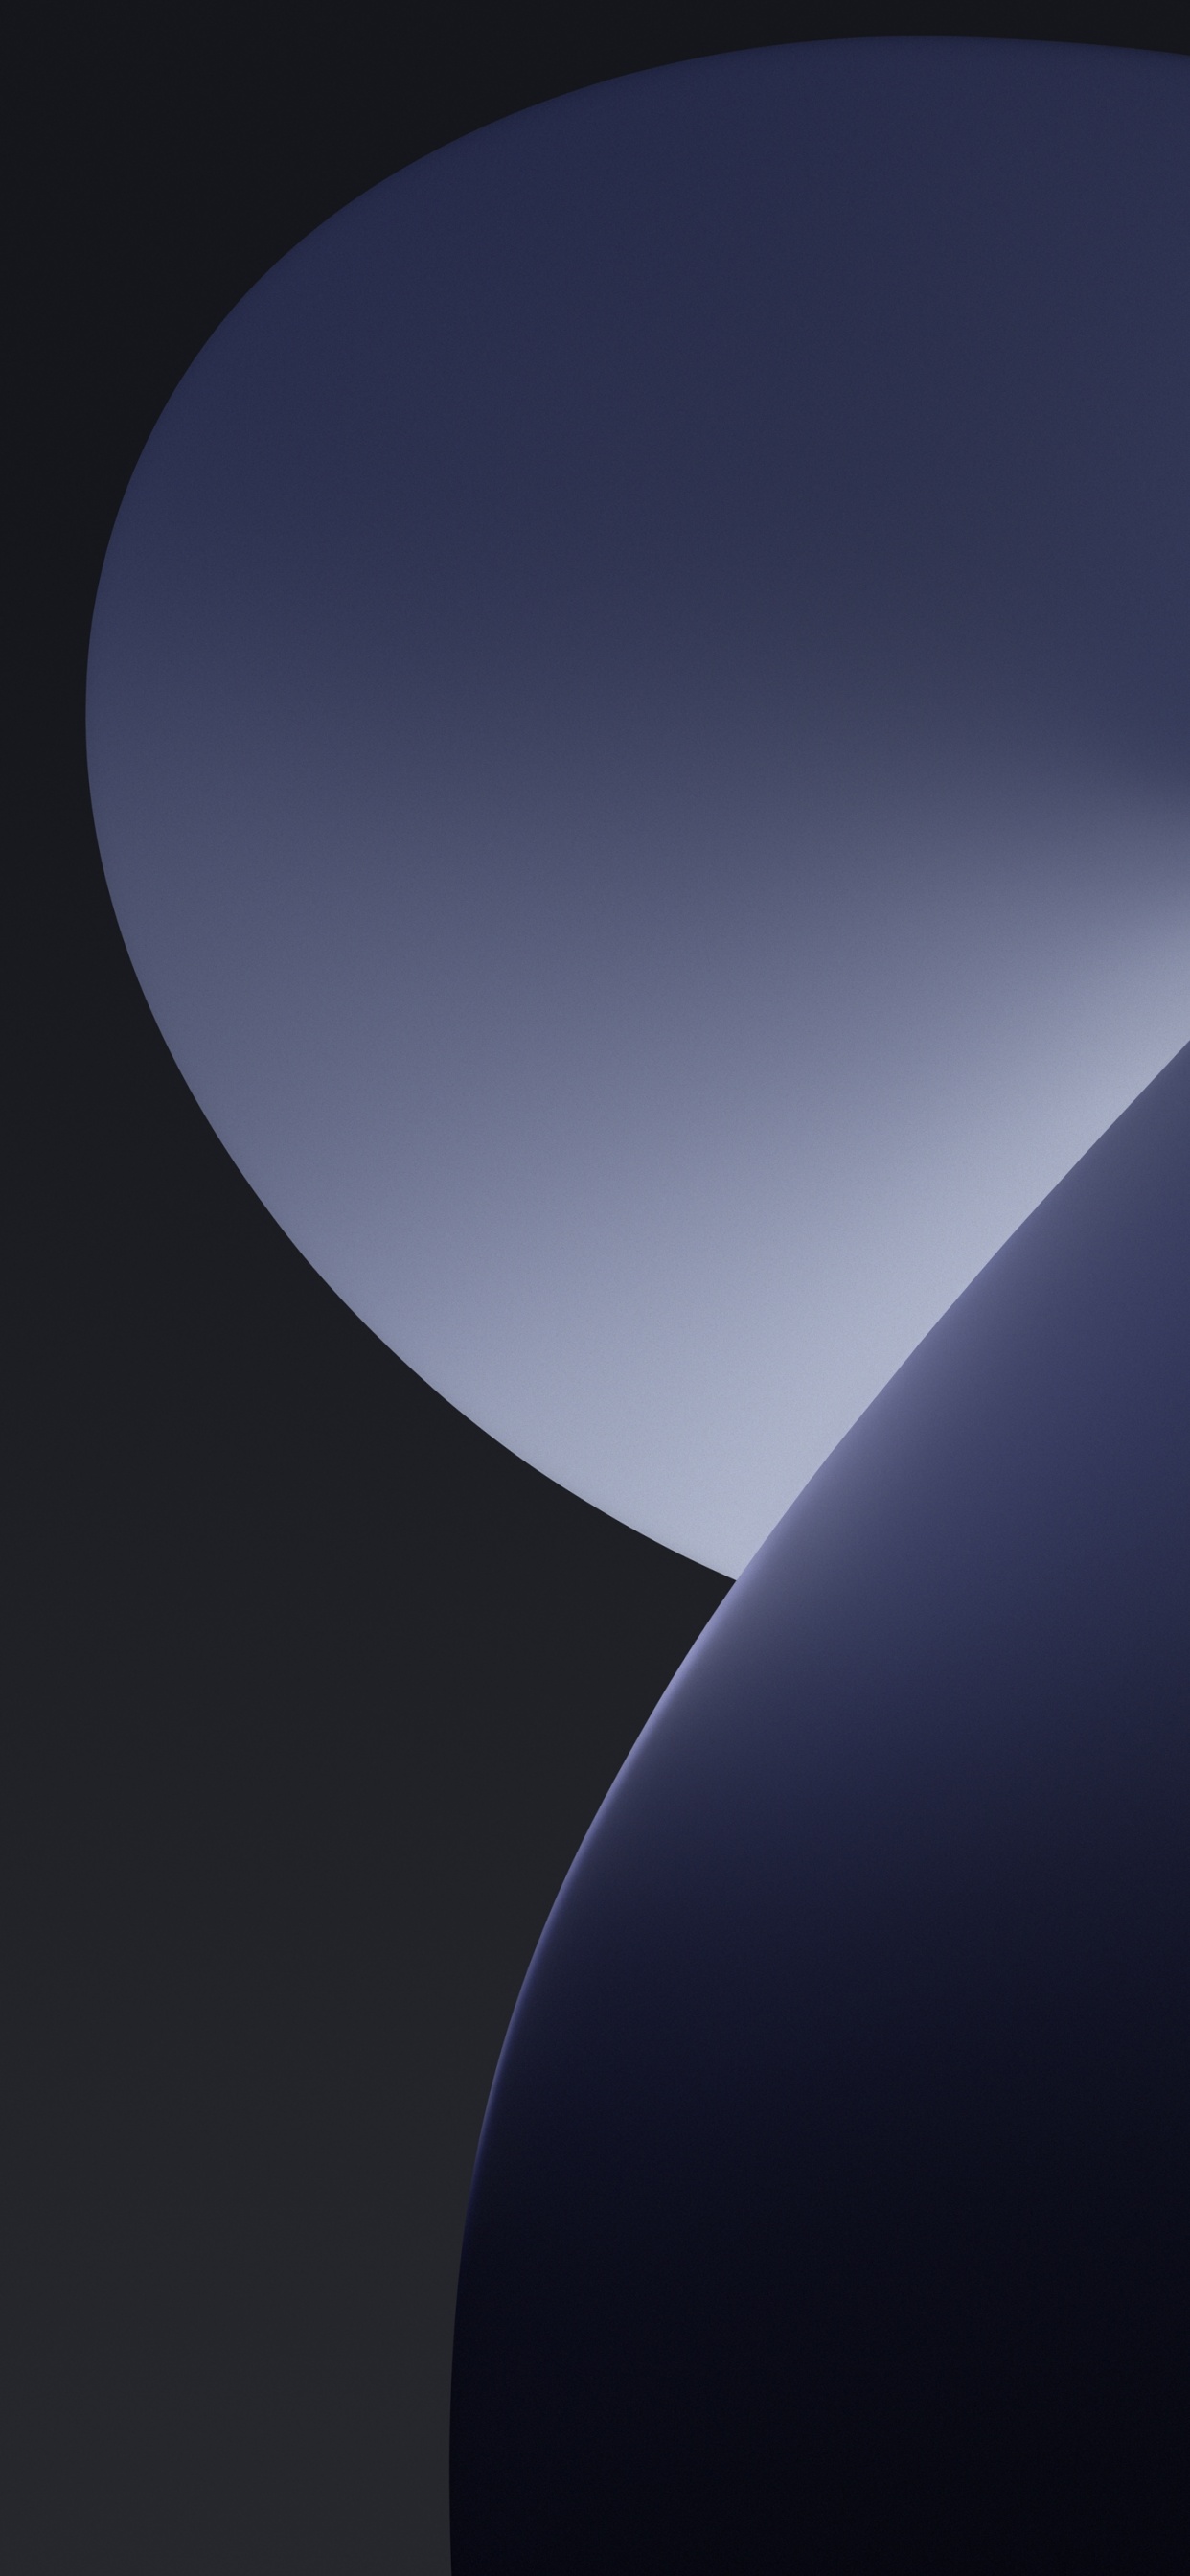 iPadOS Wallpaper 4K, Grey, Dark abstract